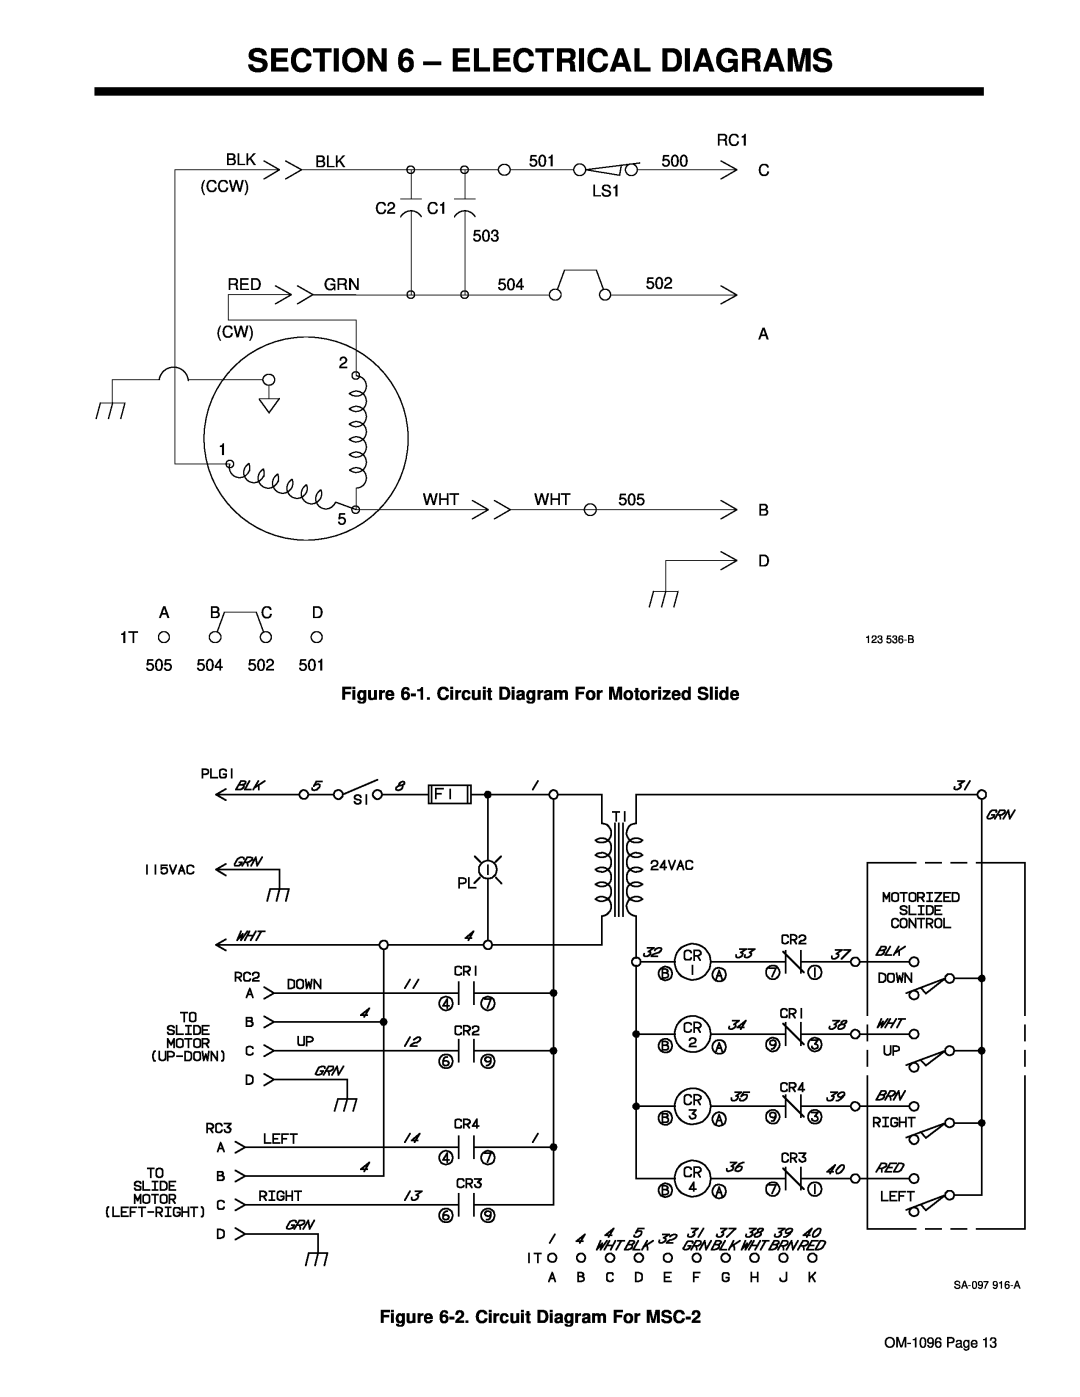 Miller Electric manual Electrical Diagrams, 1. Circuit Diagram For Motorized Slide, 2. Circuit Diagram For MSC-2 